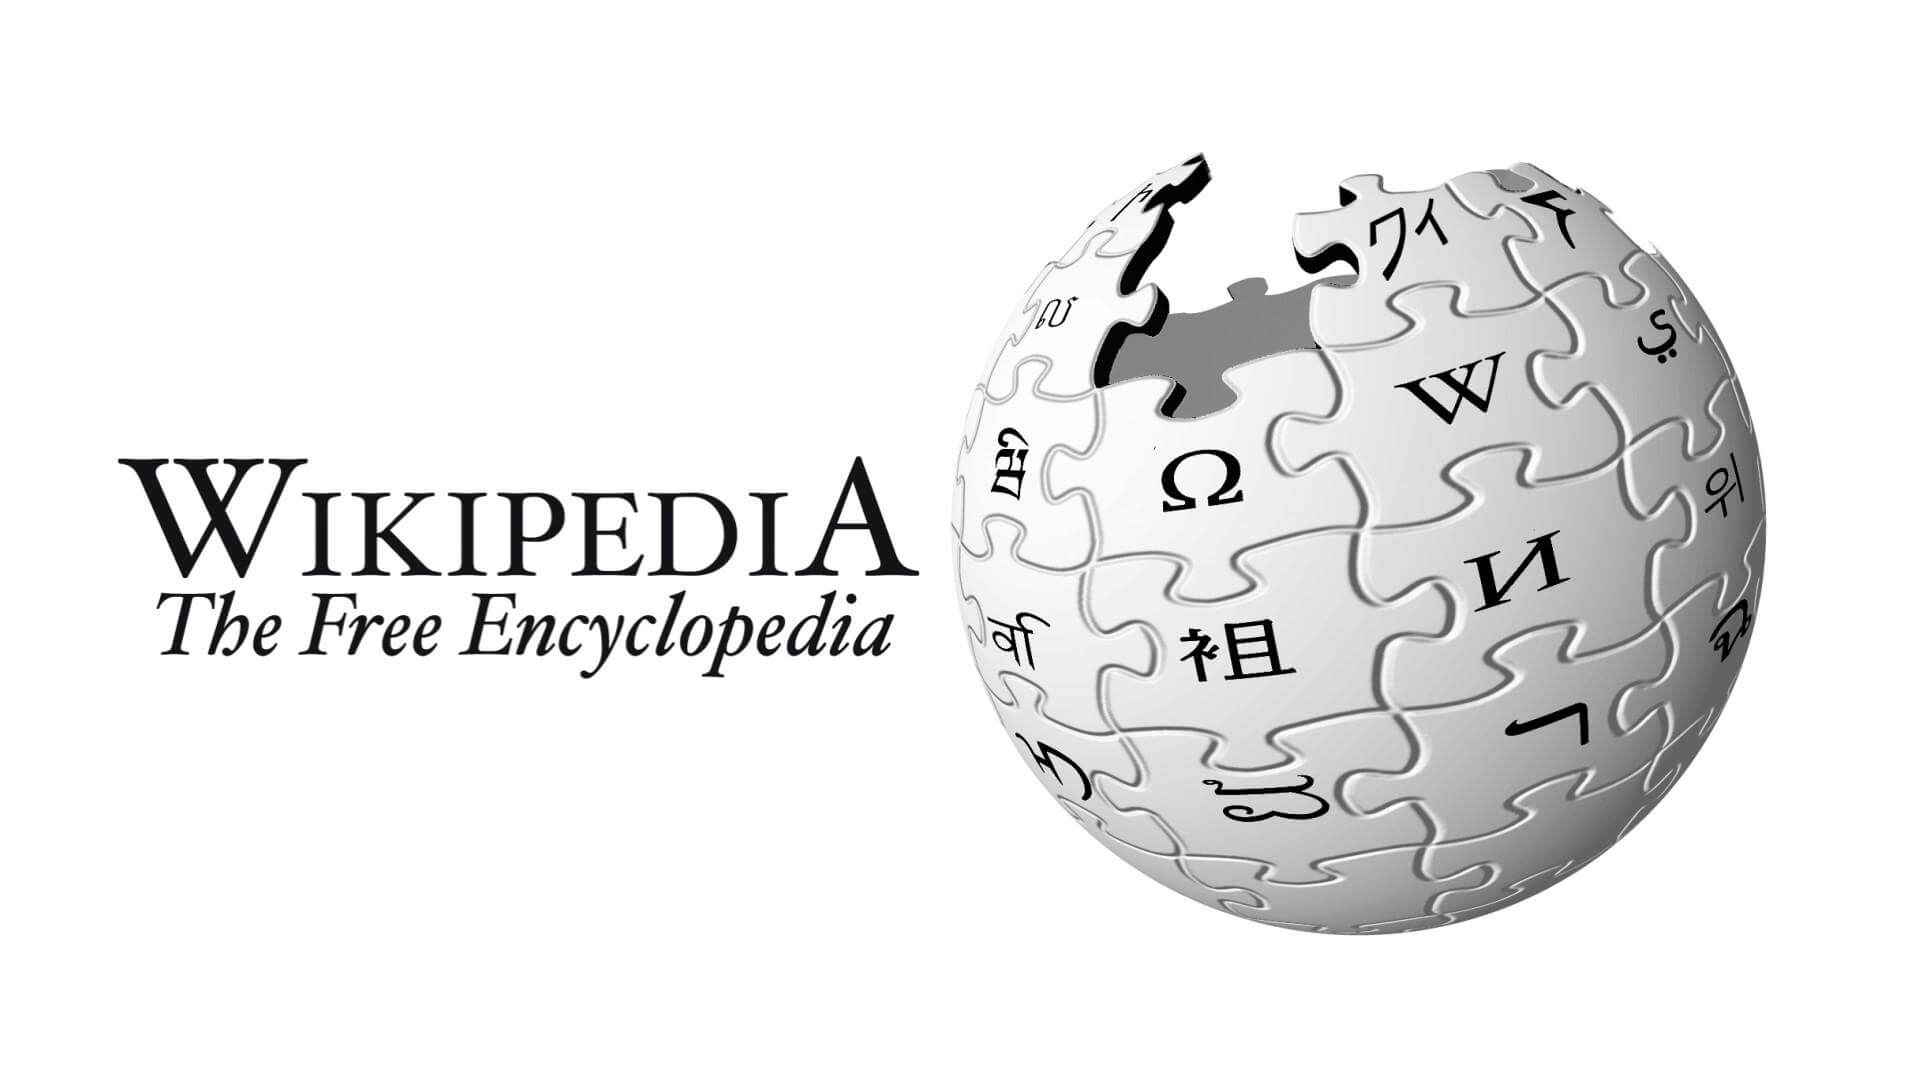 Wikipediaでランダムなページに飛ぶ機能が面白すぎて一生読める おまかせ表示 Aketama Official Blog